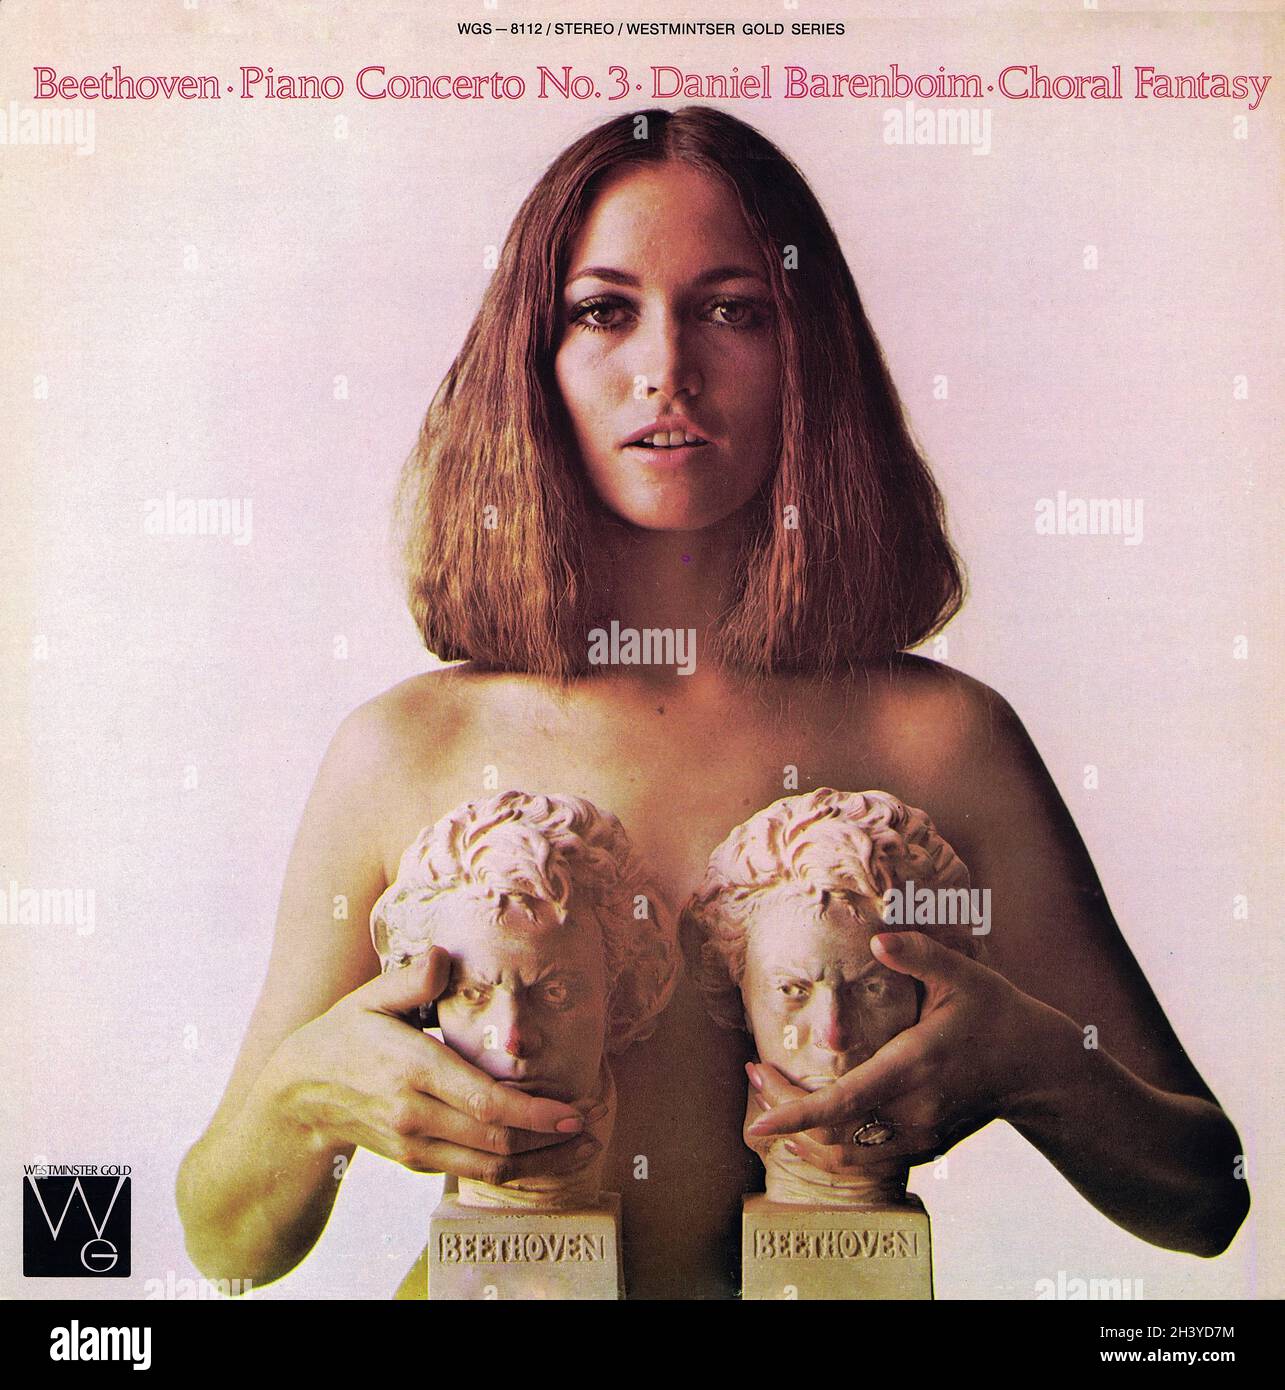 Beethoven Concerto 3 Choral Fantasy - Barenboim Westminster Gold - Música  Clásica Vinyl Record Vintage Fotografía de stock - Alamy